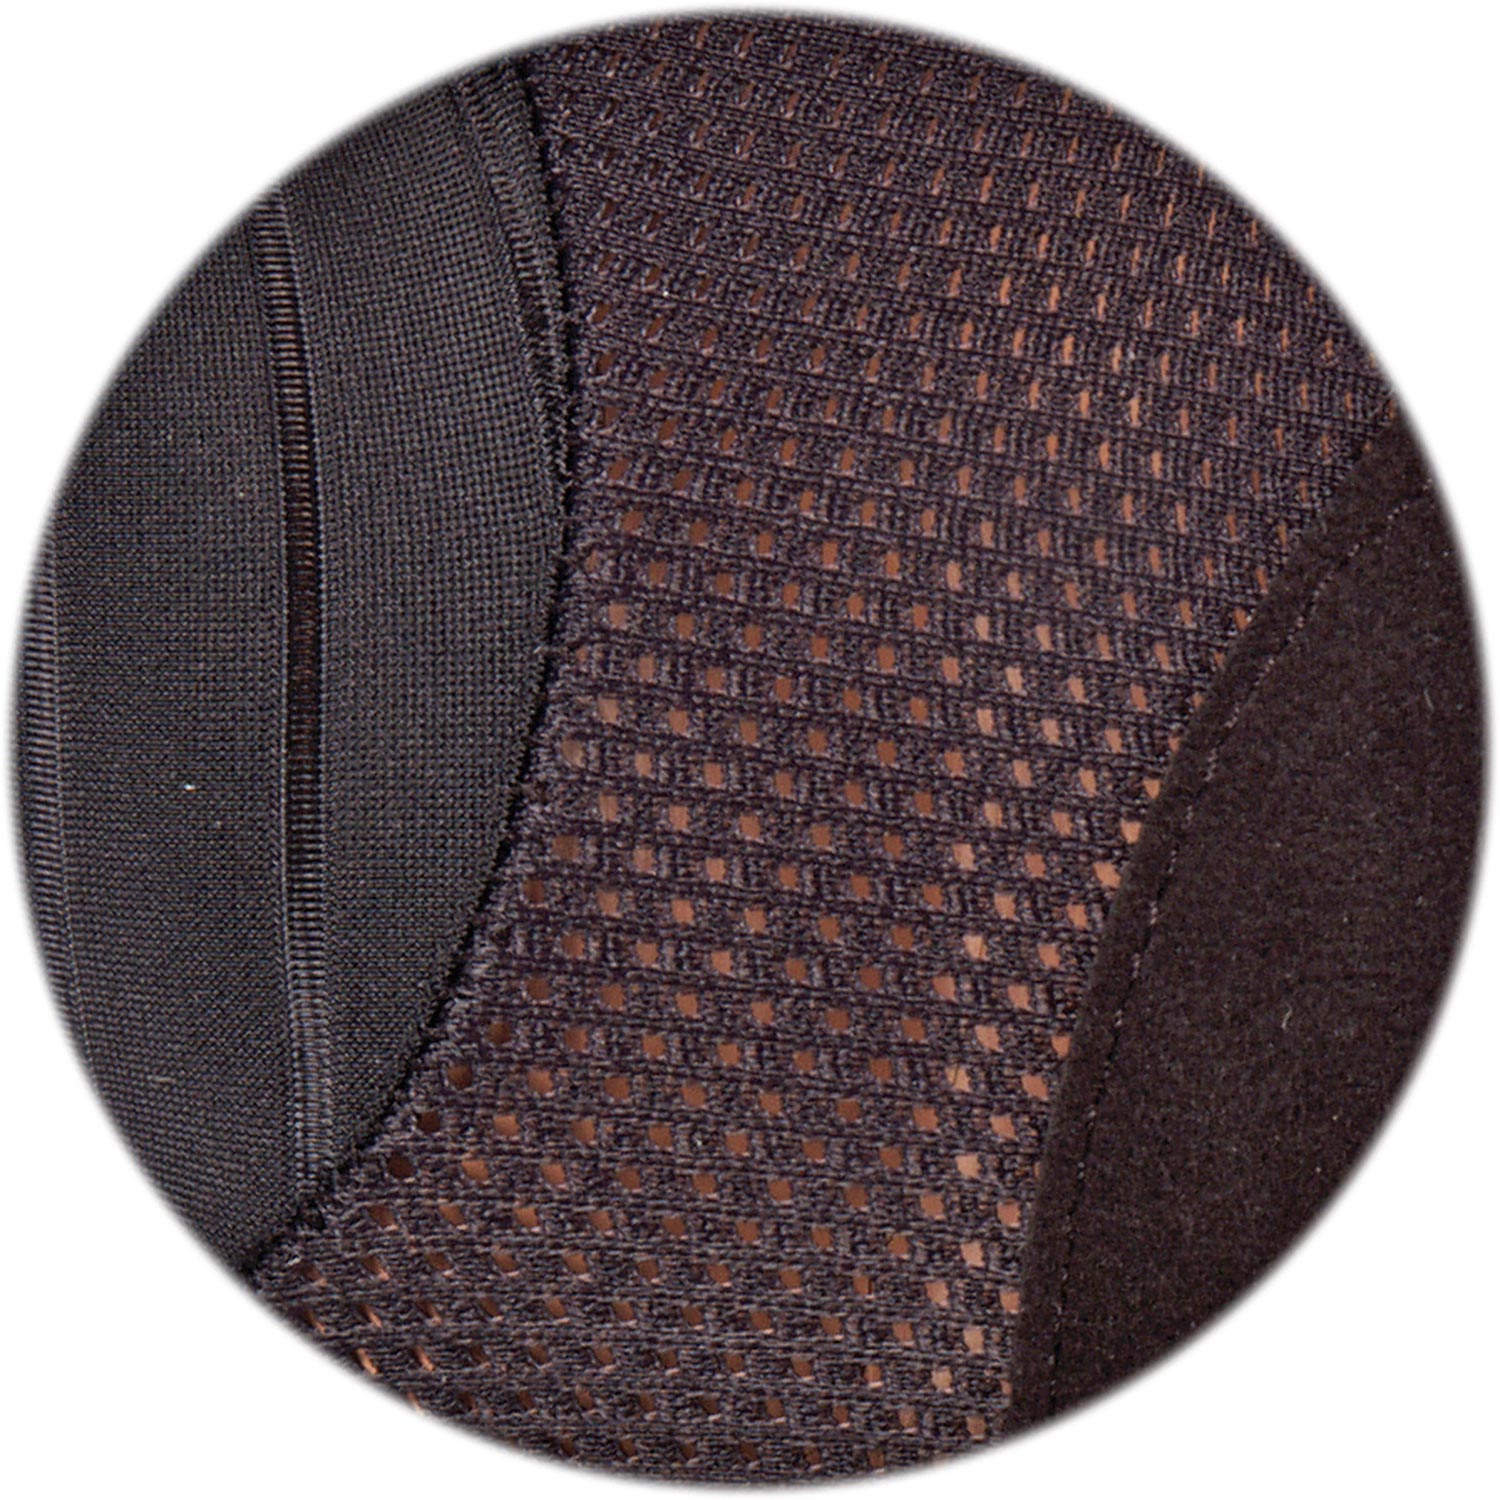 KA0280-AD: Biljart handschoen Adam Pro zwart large/medium